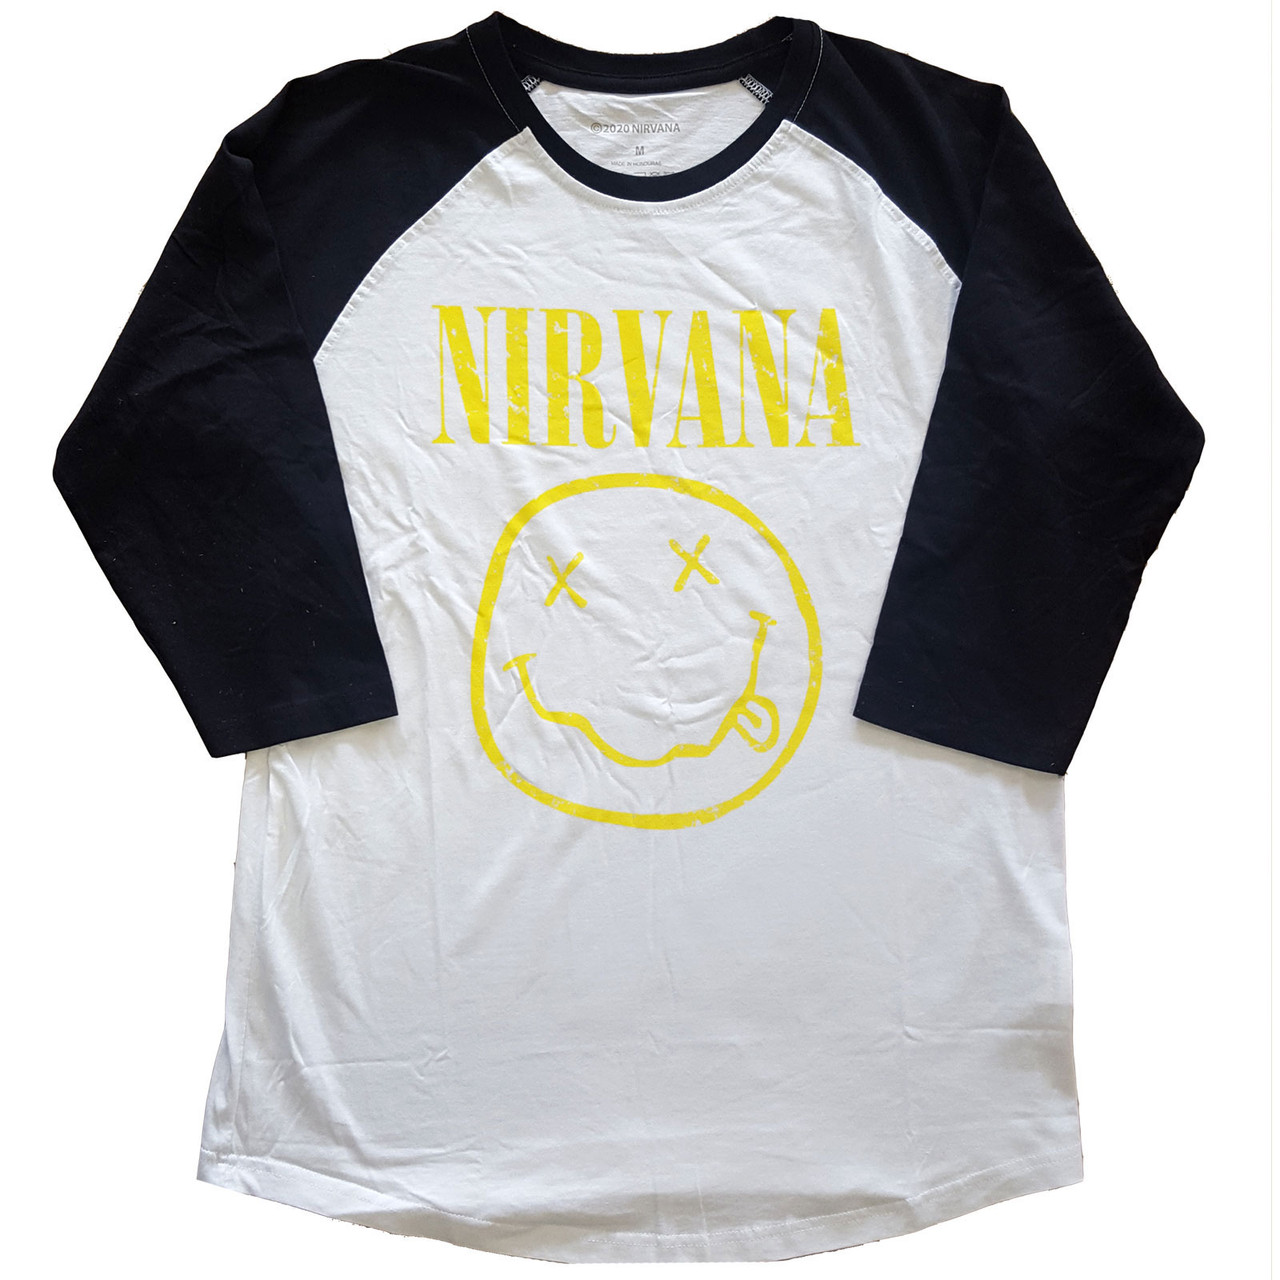 Nirvana 'Yellow Smiley' (Black & White) Raglan Baseball Shirt